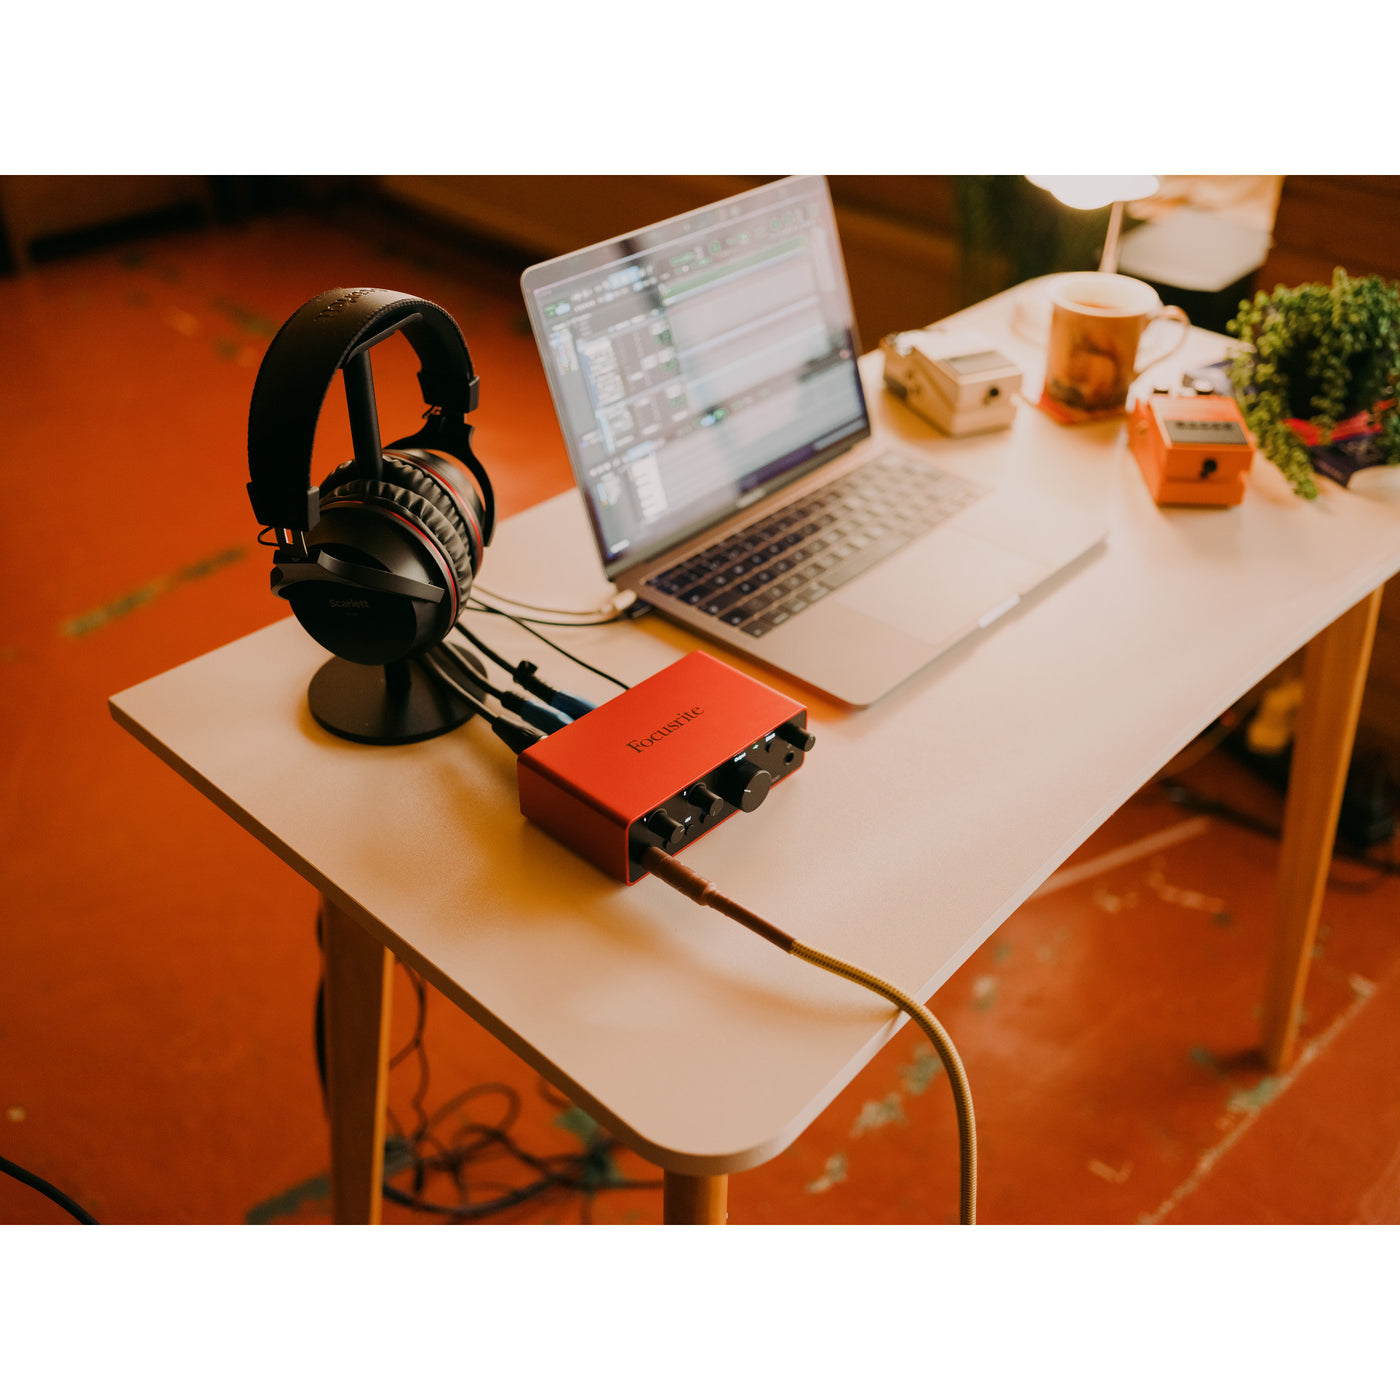 Focusrite Scarlett Solo Studio Bundle (4th Gen) USB Audio Interface with Mic & Headphones, Professional Quality Audio Equipment for Studio Musicians, Guitarists, & Producers